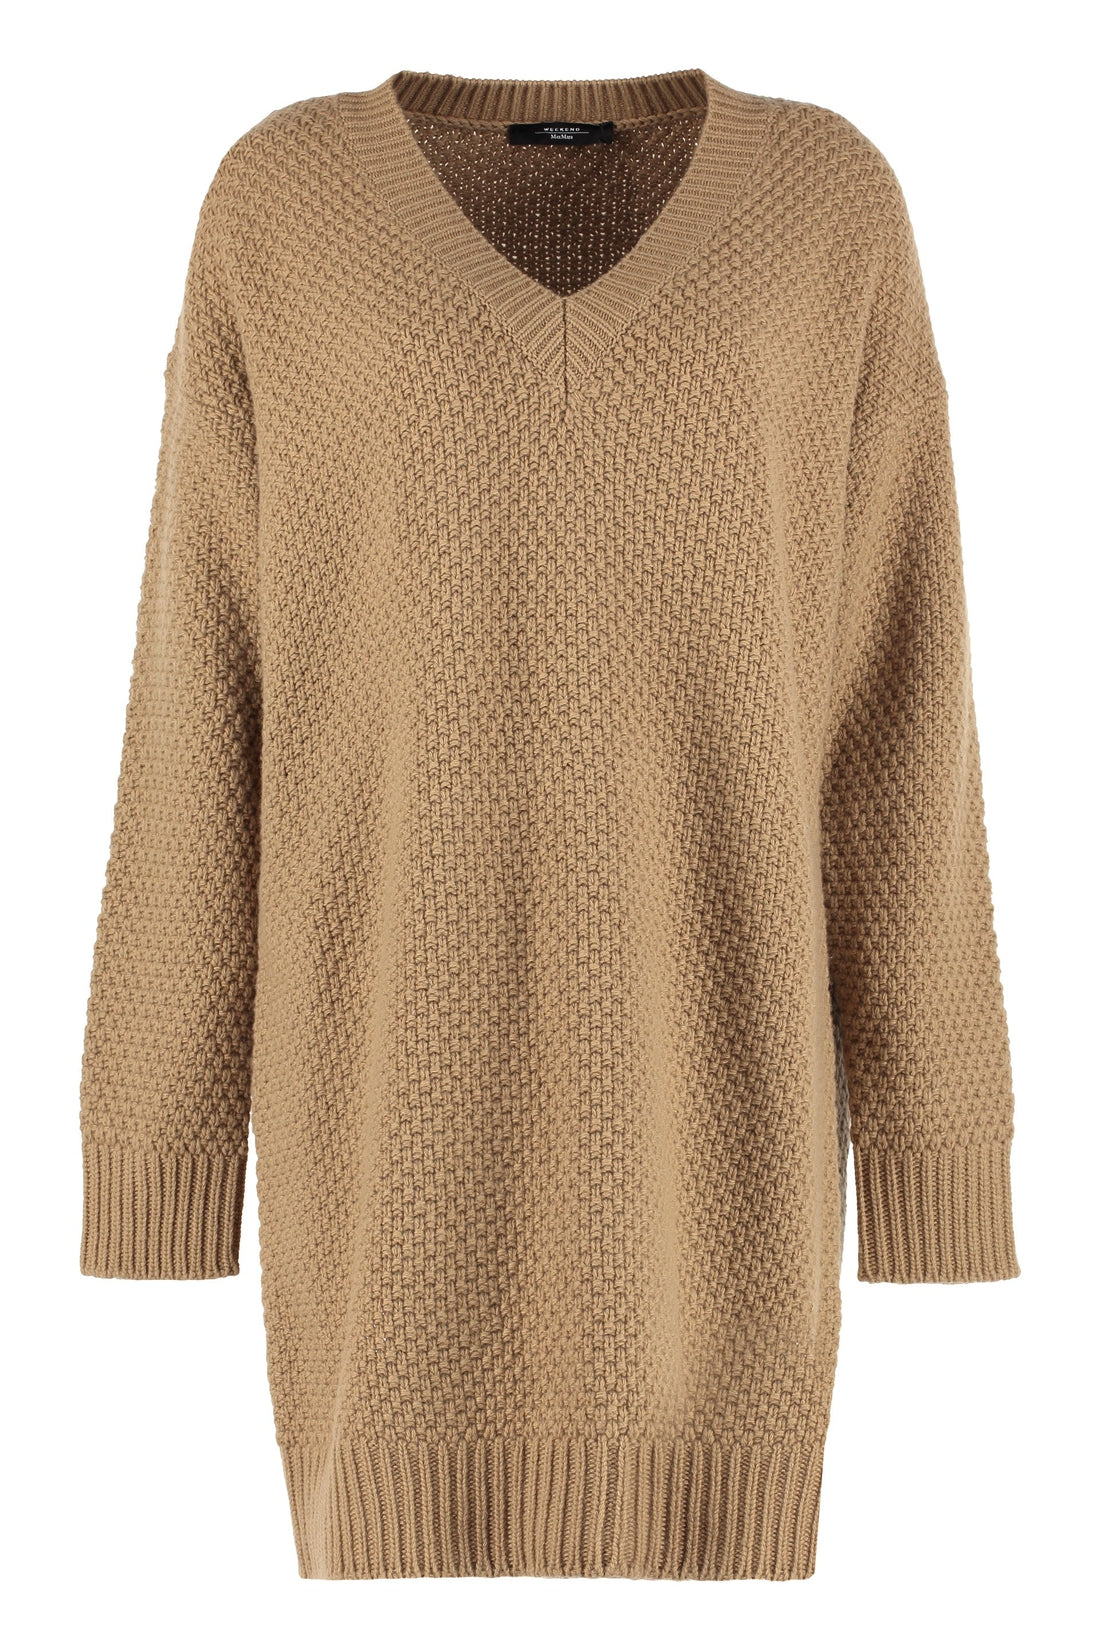 Weekend Max Mara-OUTLET-SALE-Alfeo oversize virgin wool sweater-ARCHIVIST